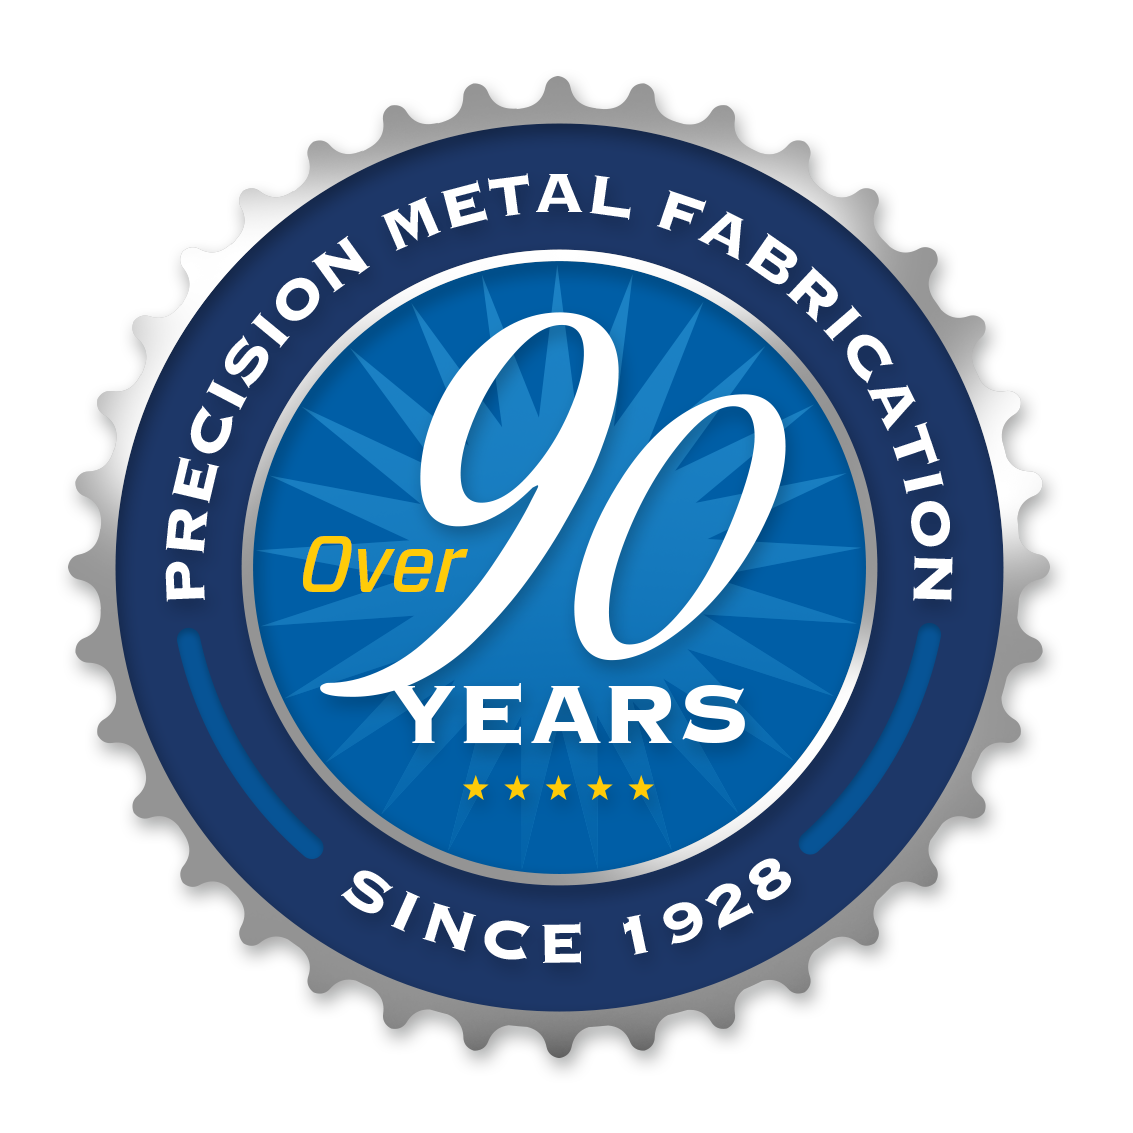 precision metal fabrication since 1928